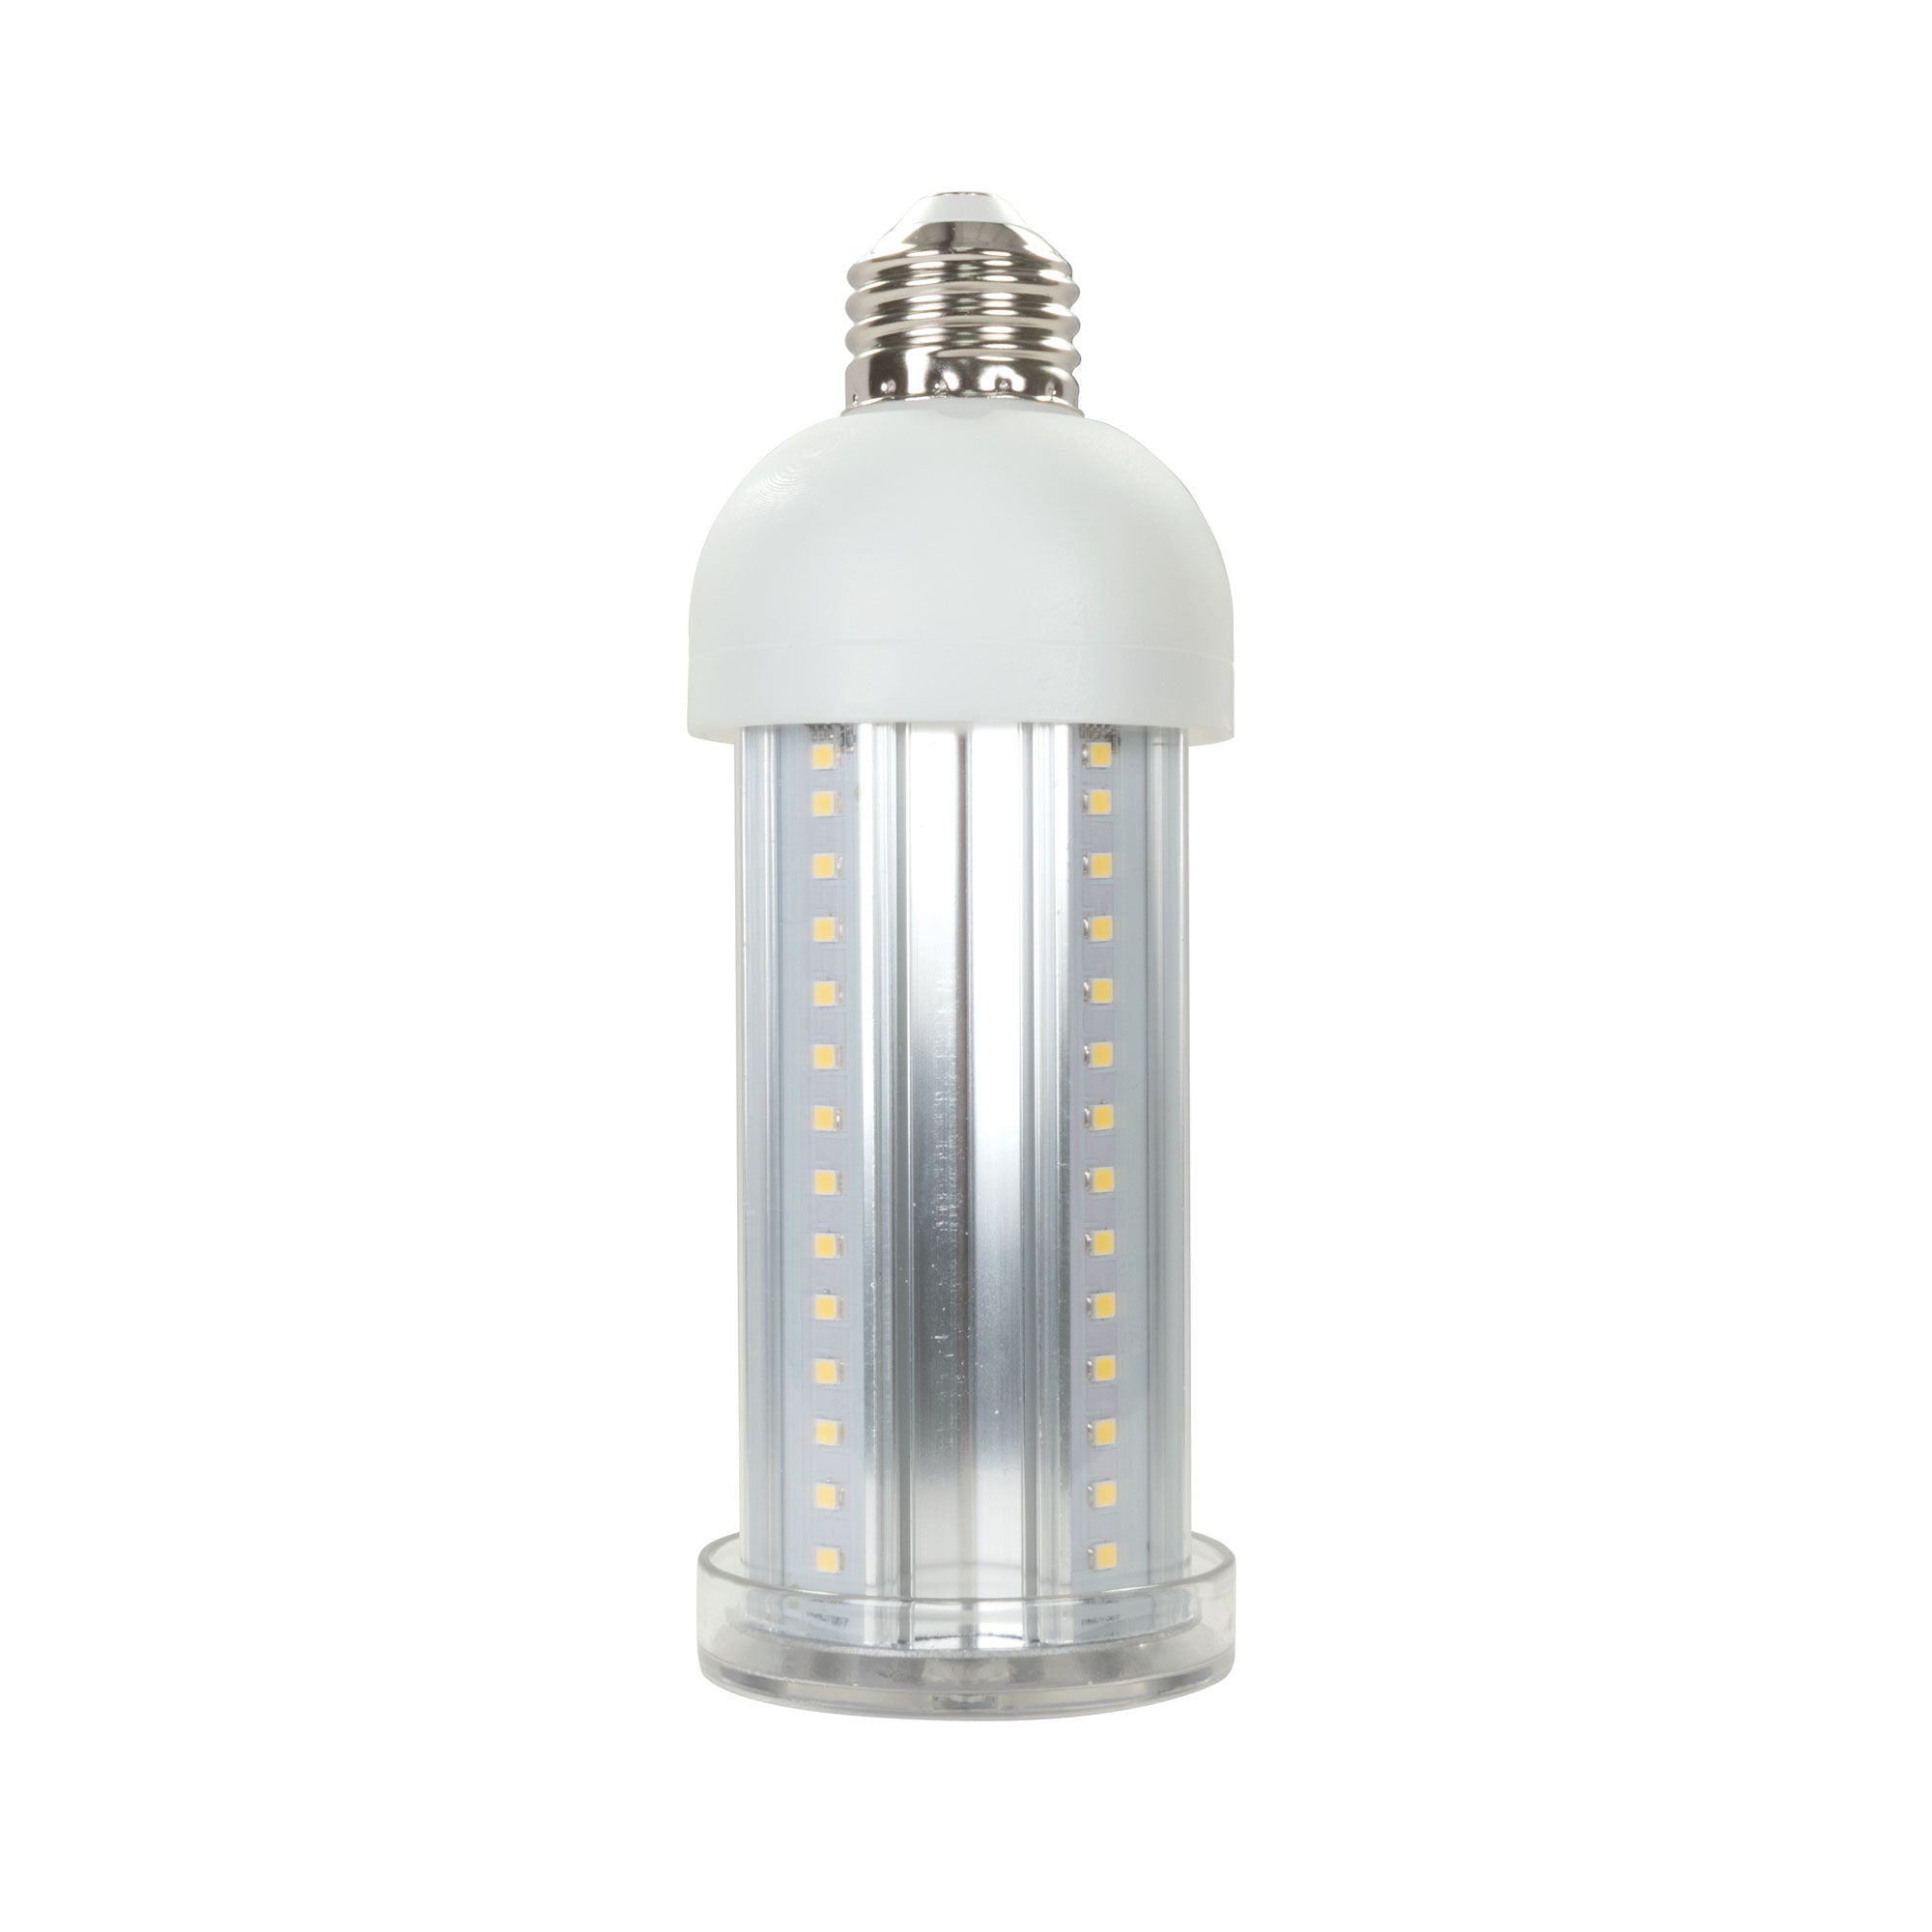 2500 Lumen LED Corn Cob Bulb, 25-Watt, 250-Watt Equivalent, 5000K Daylight, E26 - 8 Pack Master Case